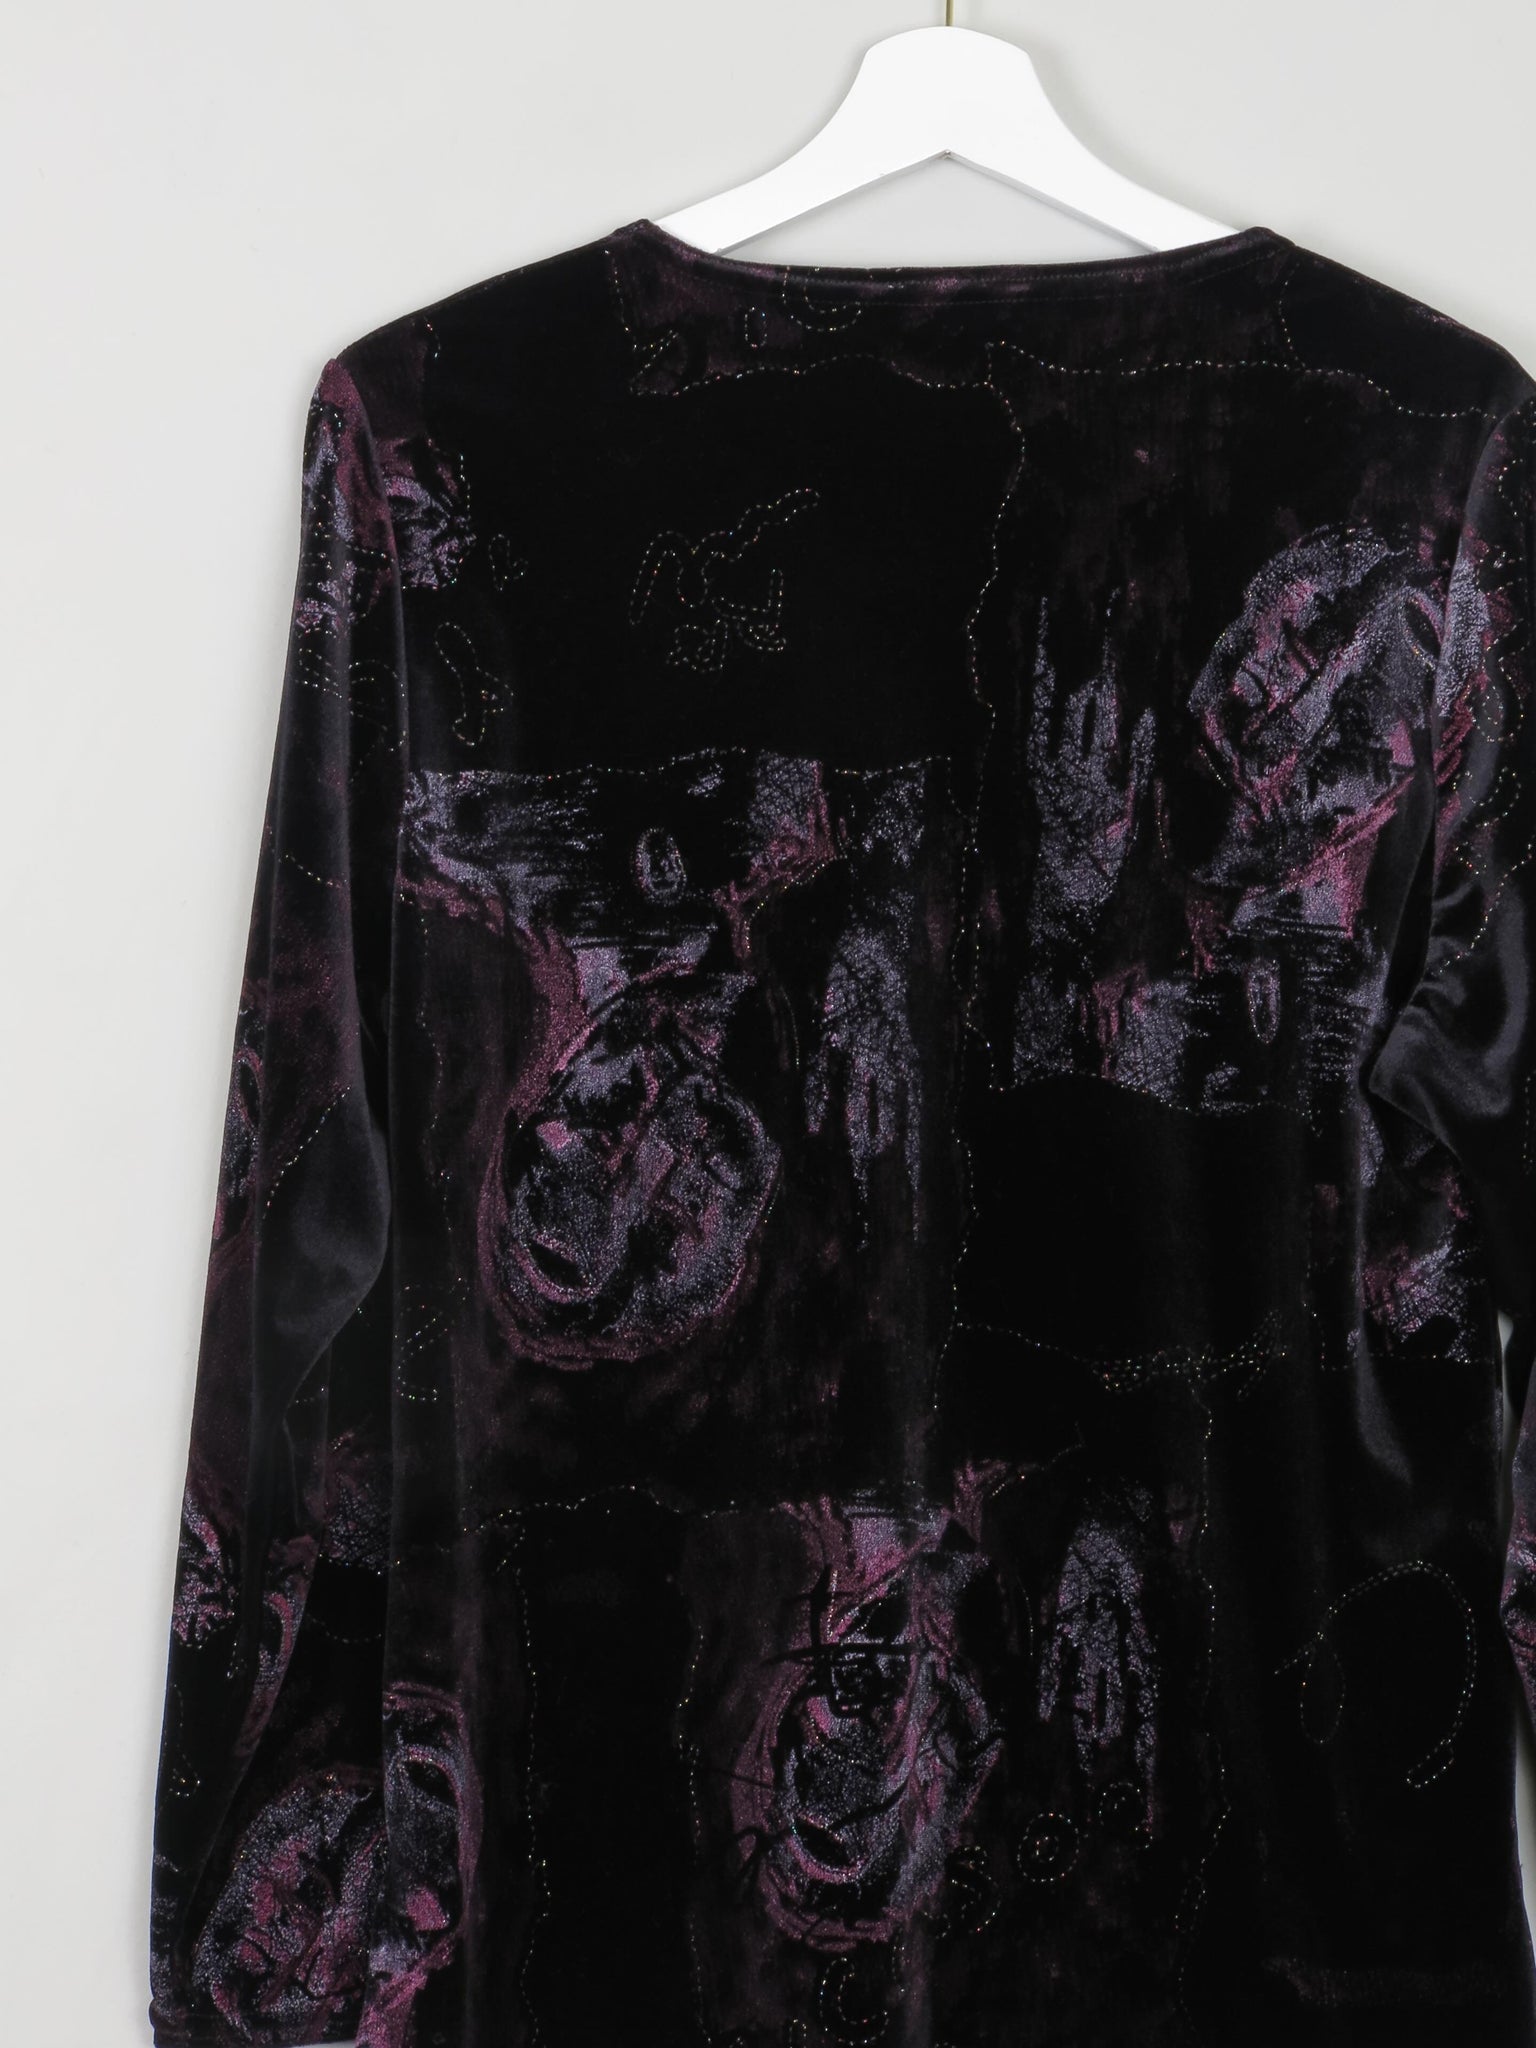 Women's Vintage Black Velvet Top With Embossed Prints S - The Harlequin